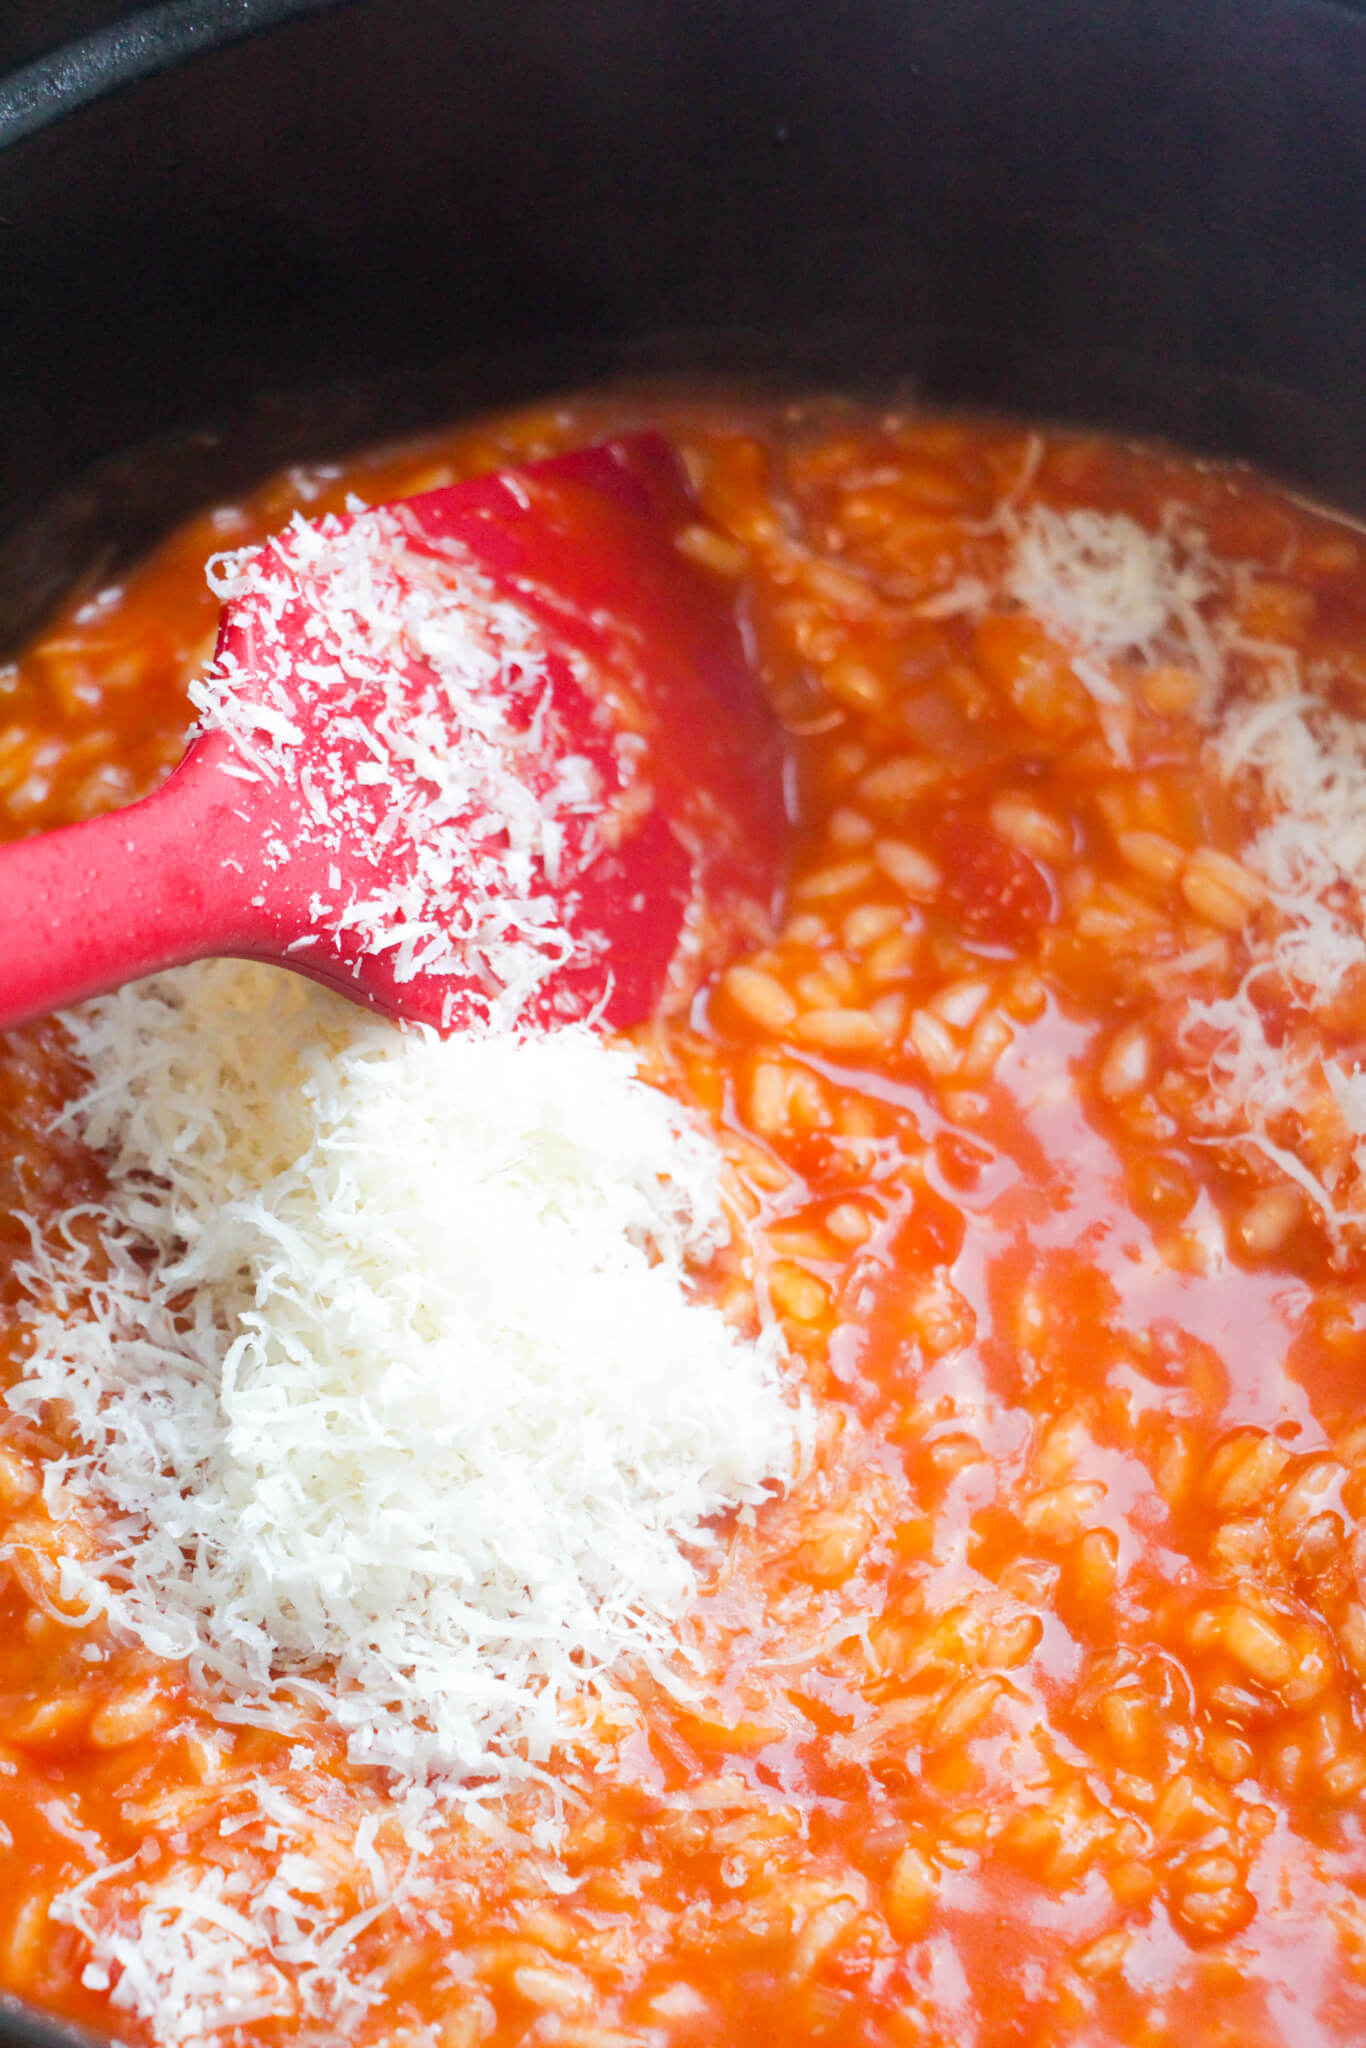 Red spatula stirring through mascarpone and parmesan in creamy tomato risotto in a black pot.